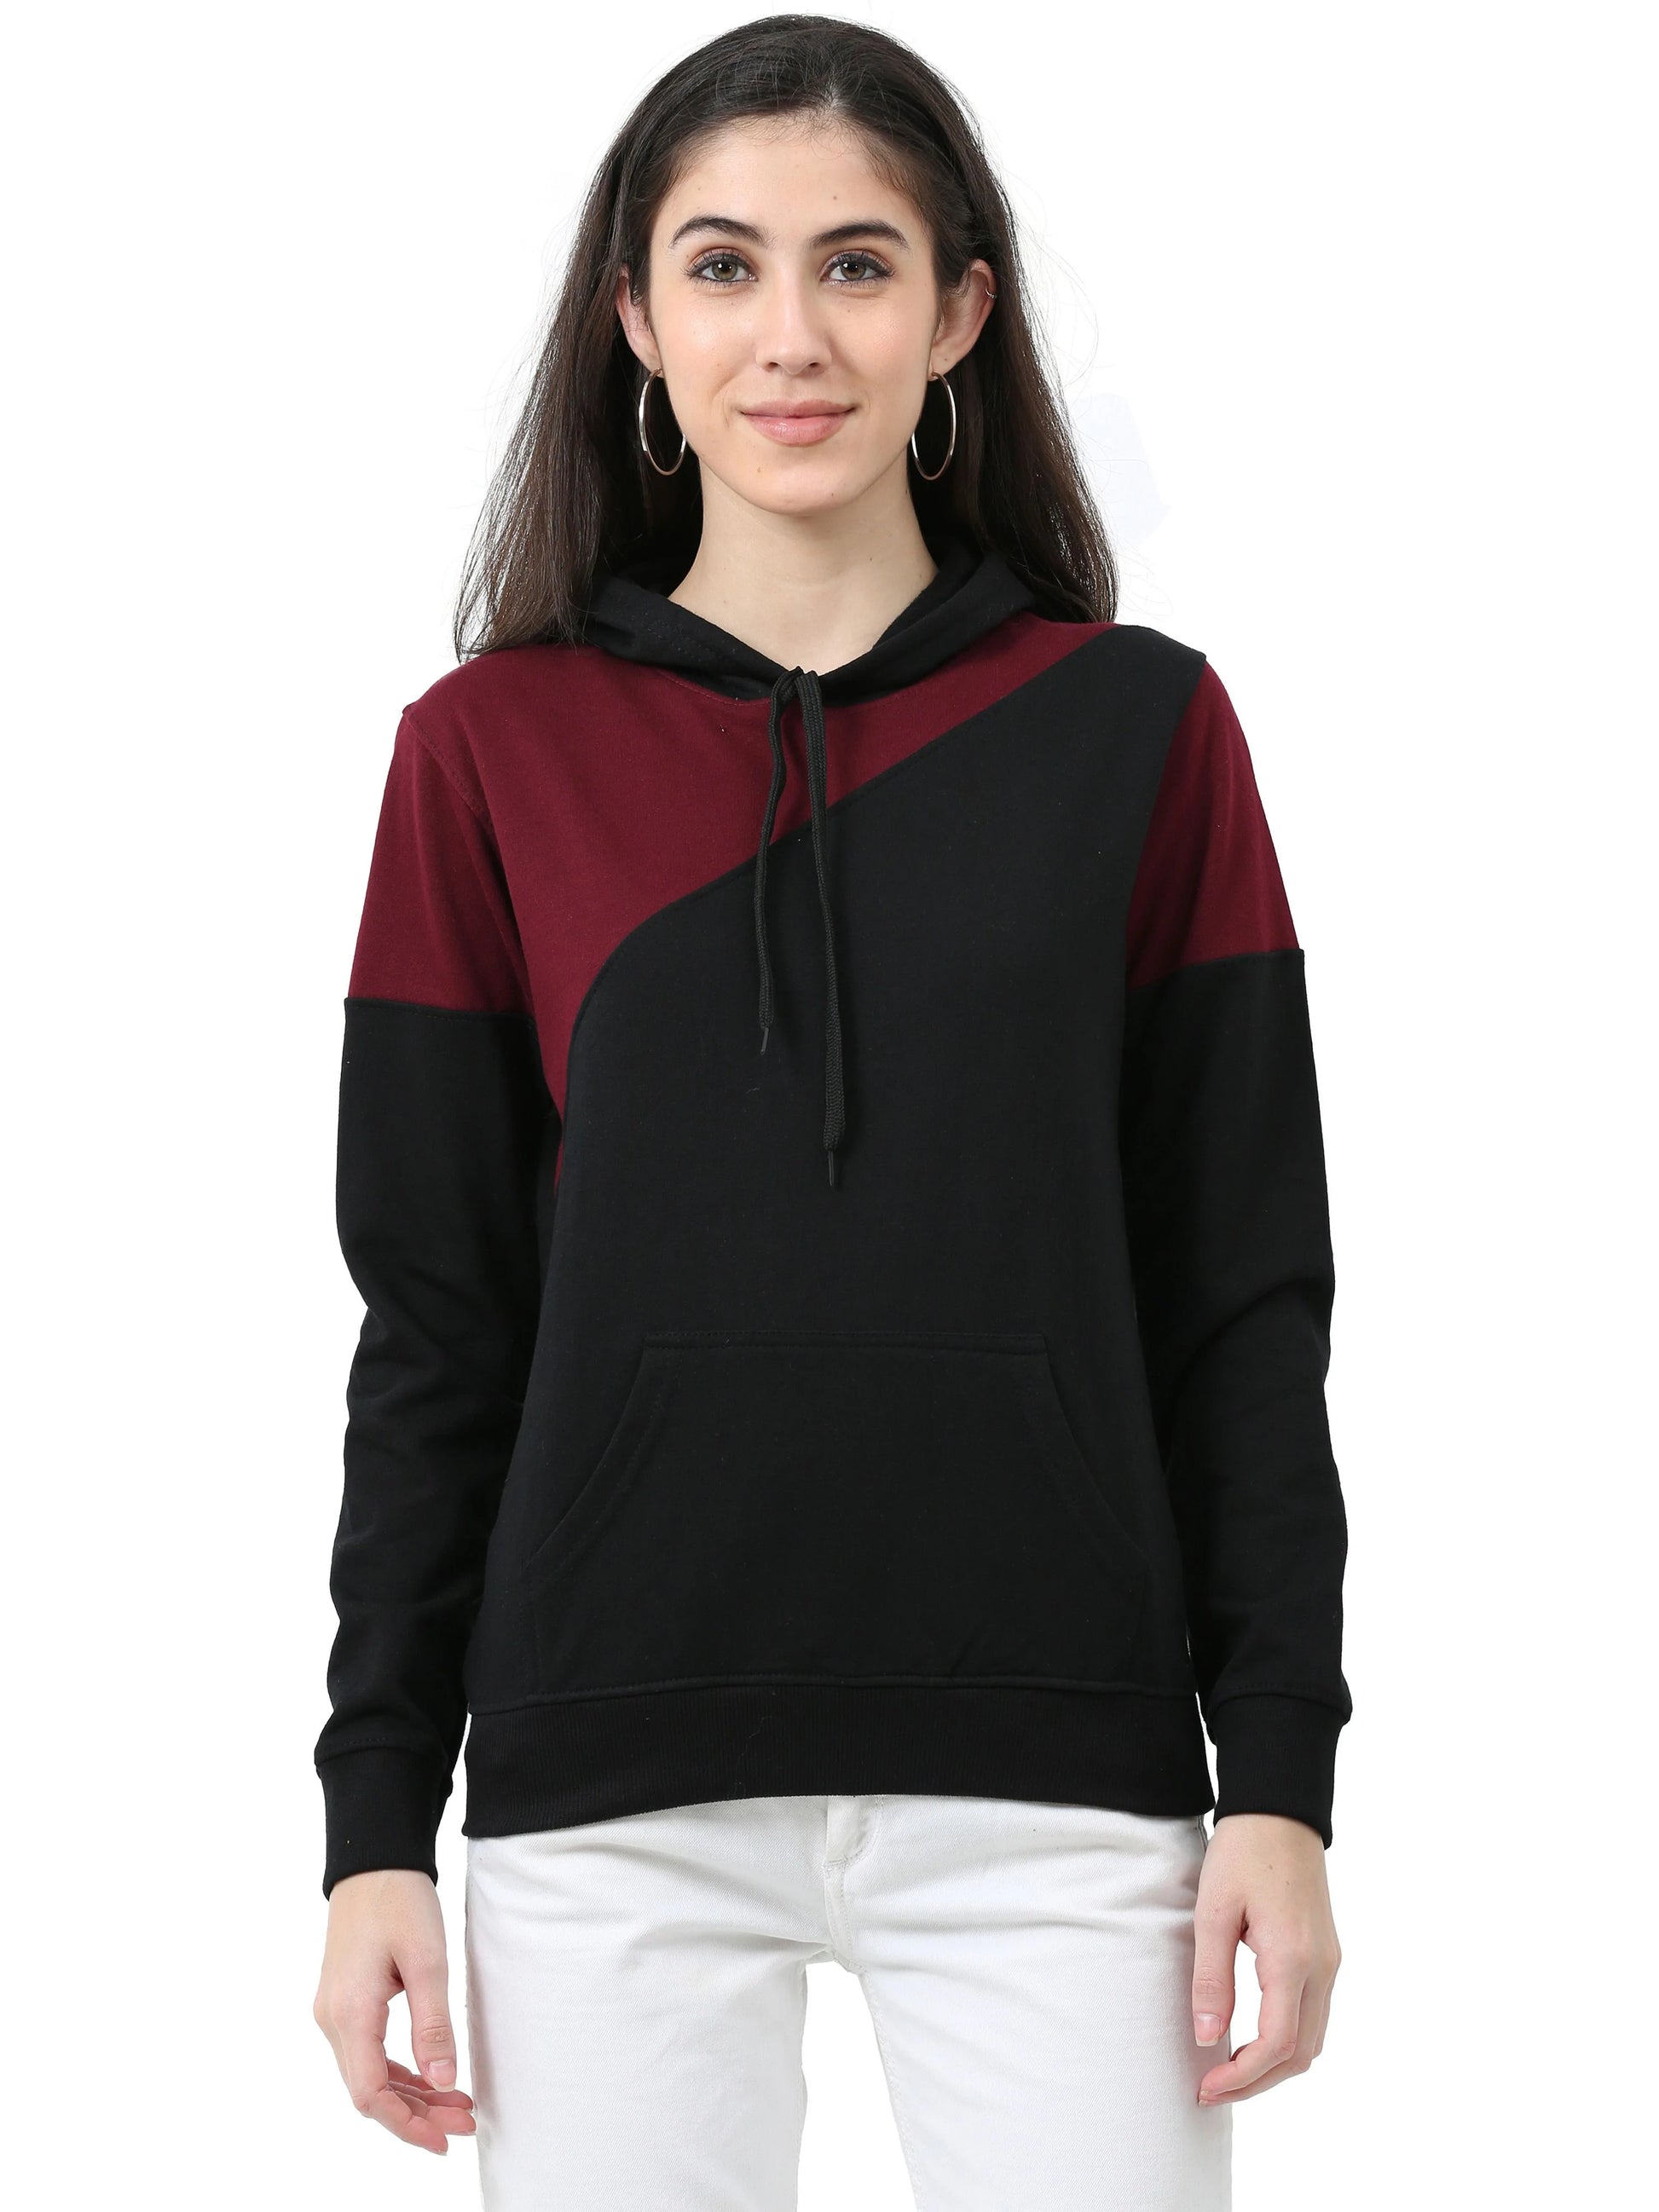 Women Cotton Ladies Hoodie Sweatshirt, Size: M- L-XL-XXL at Rs 785